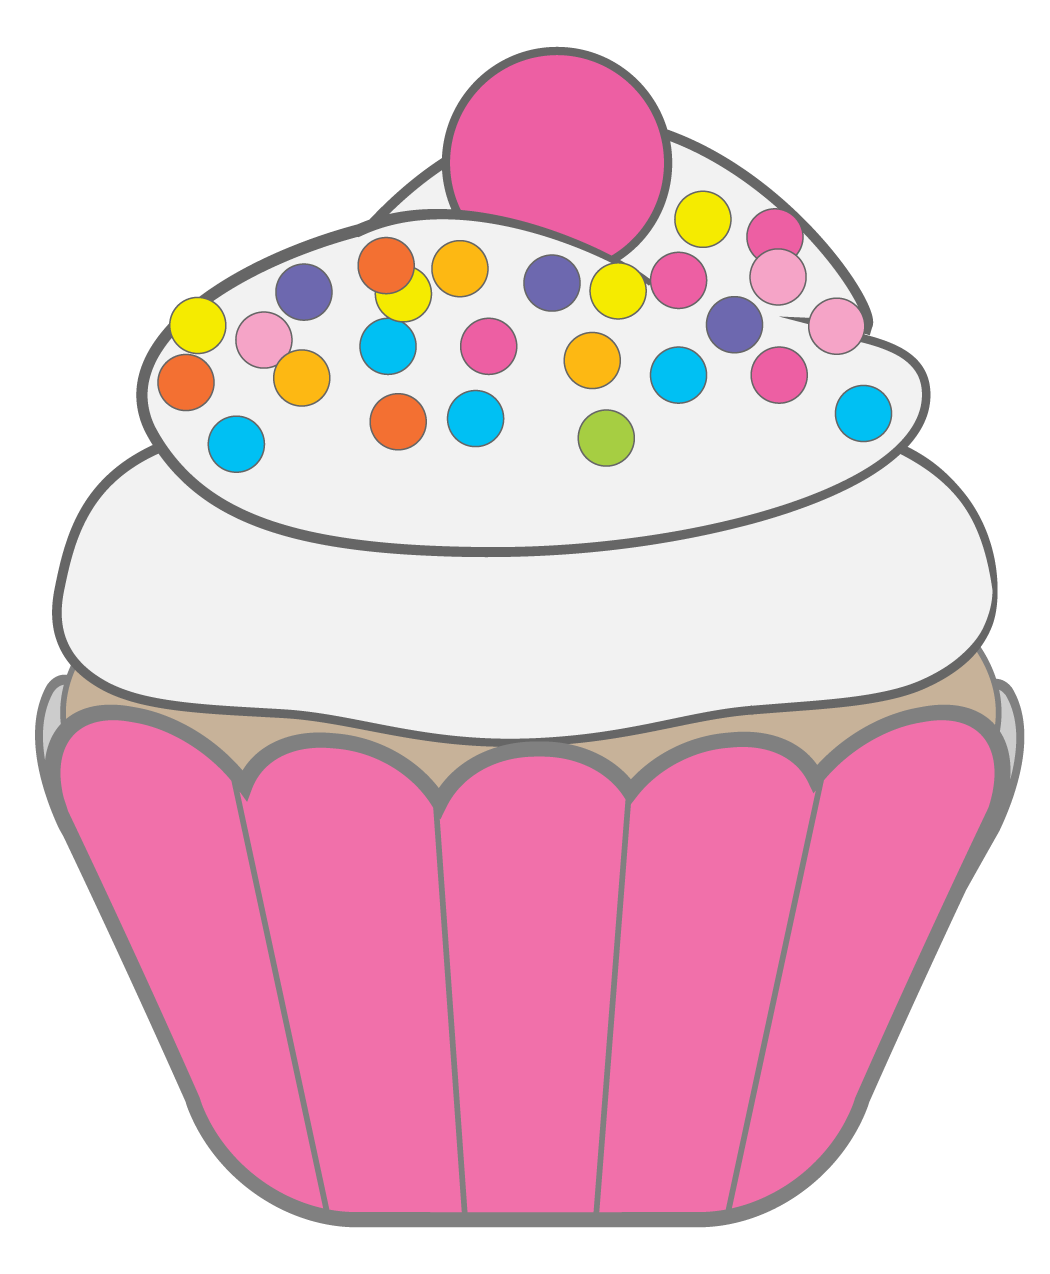 Birthday cake clip art free b - Cake Clip Art Free